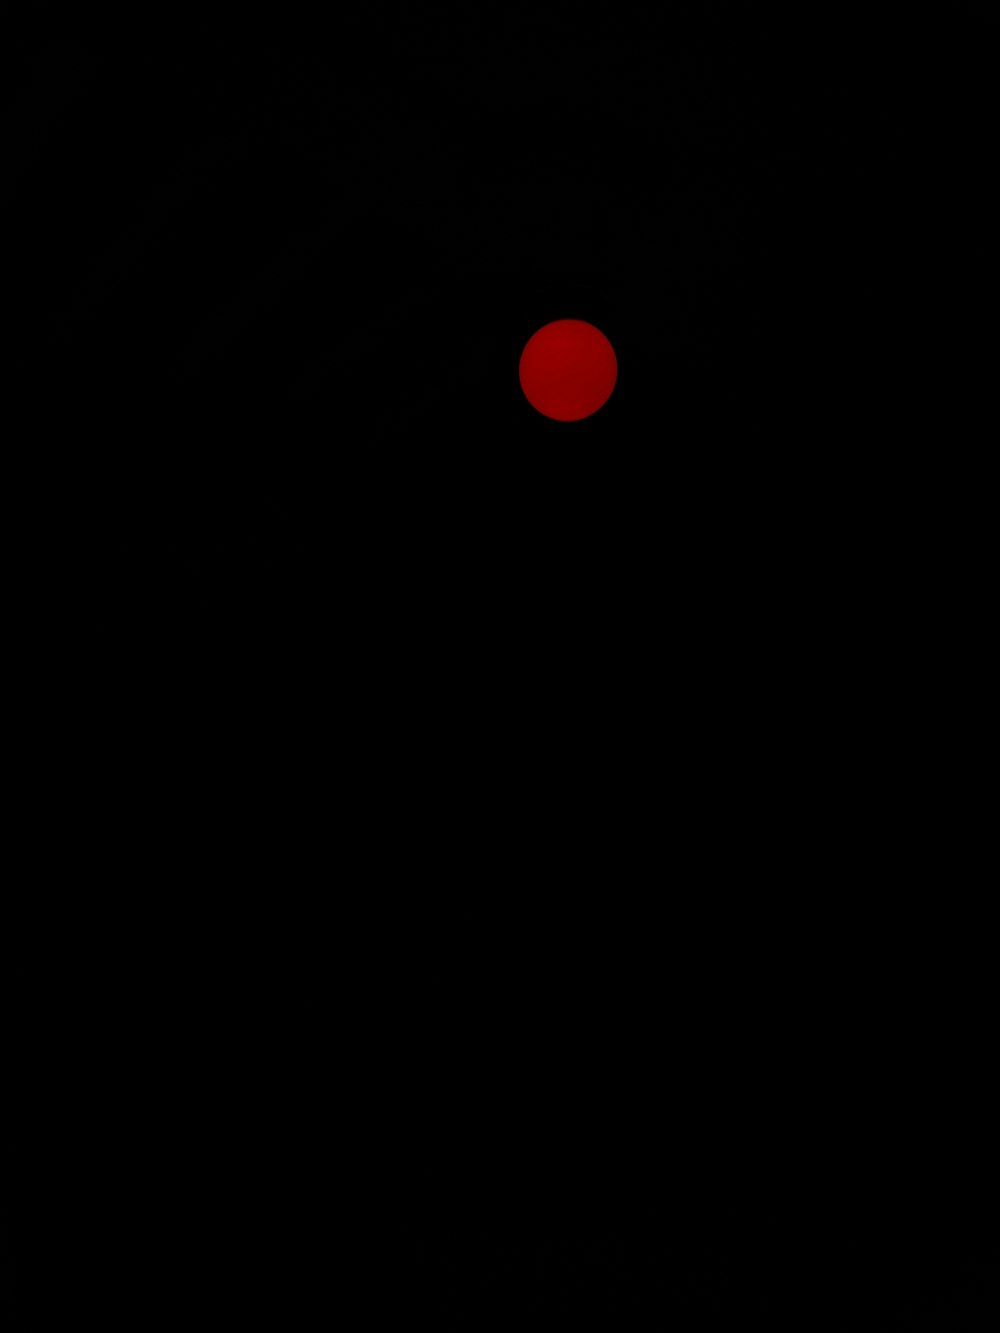 red moon at night